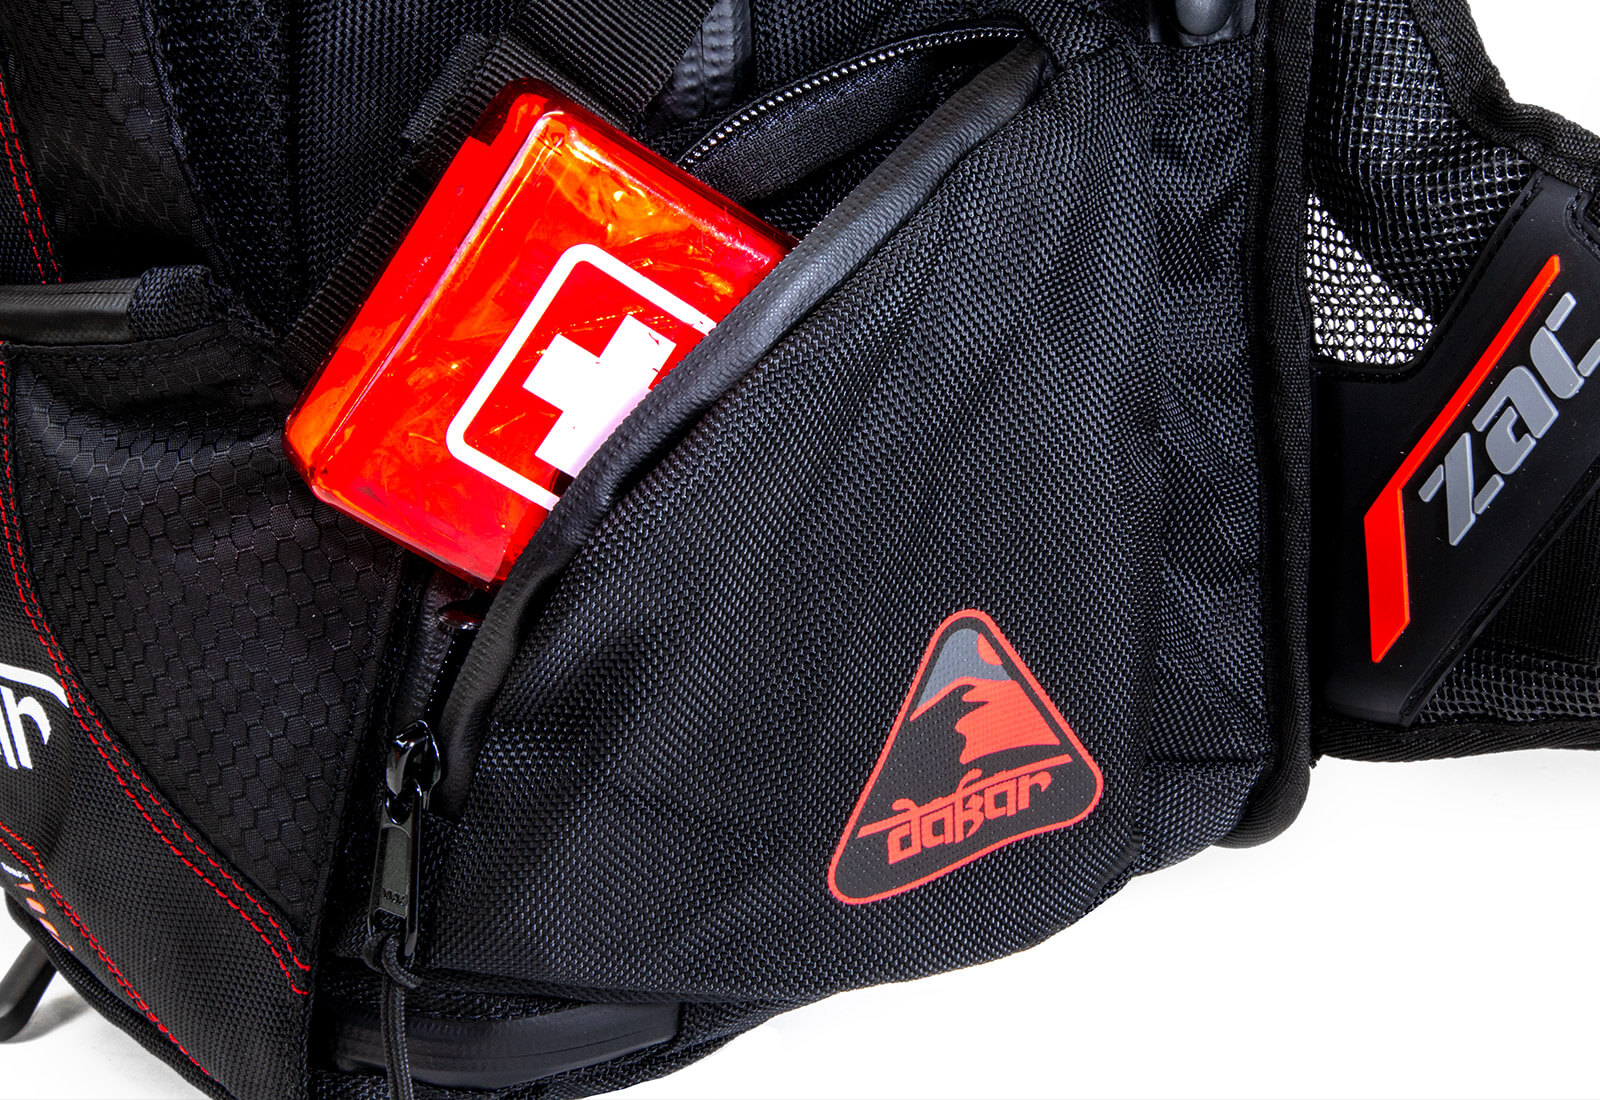 Dakar Rally DKR TAKER VII backpack black | Accessories \ Luggage \  Backpacks Shop by Team \ Racing Teams \ Dakar | F1store.net